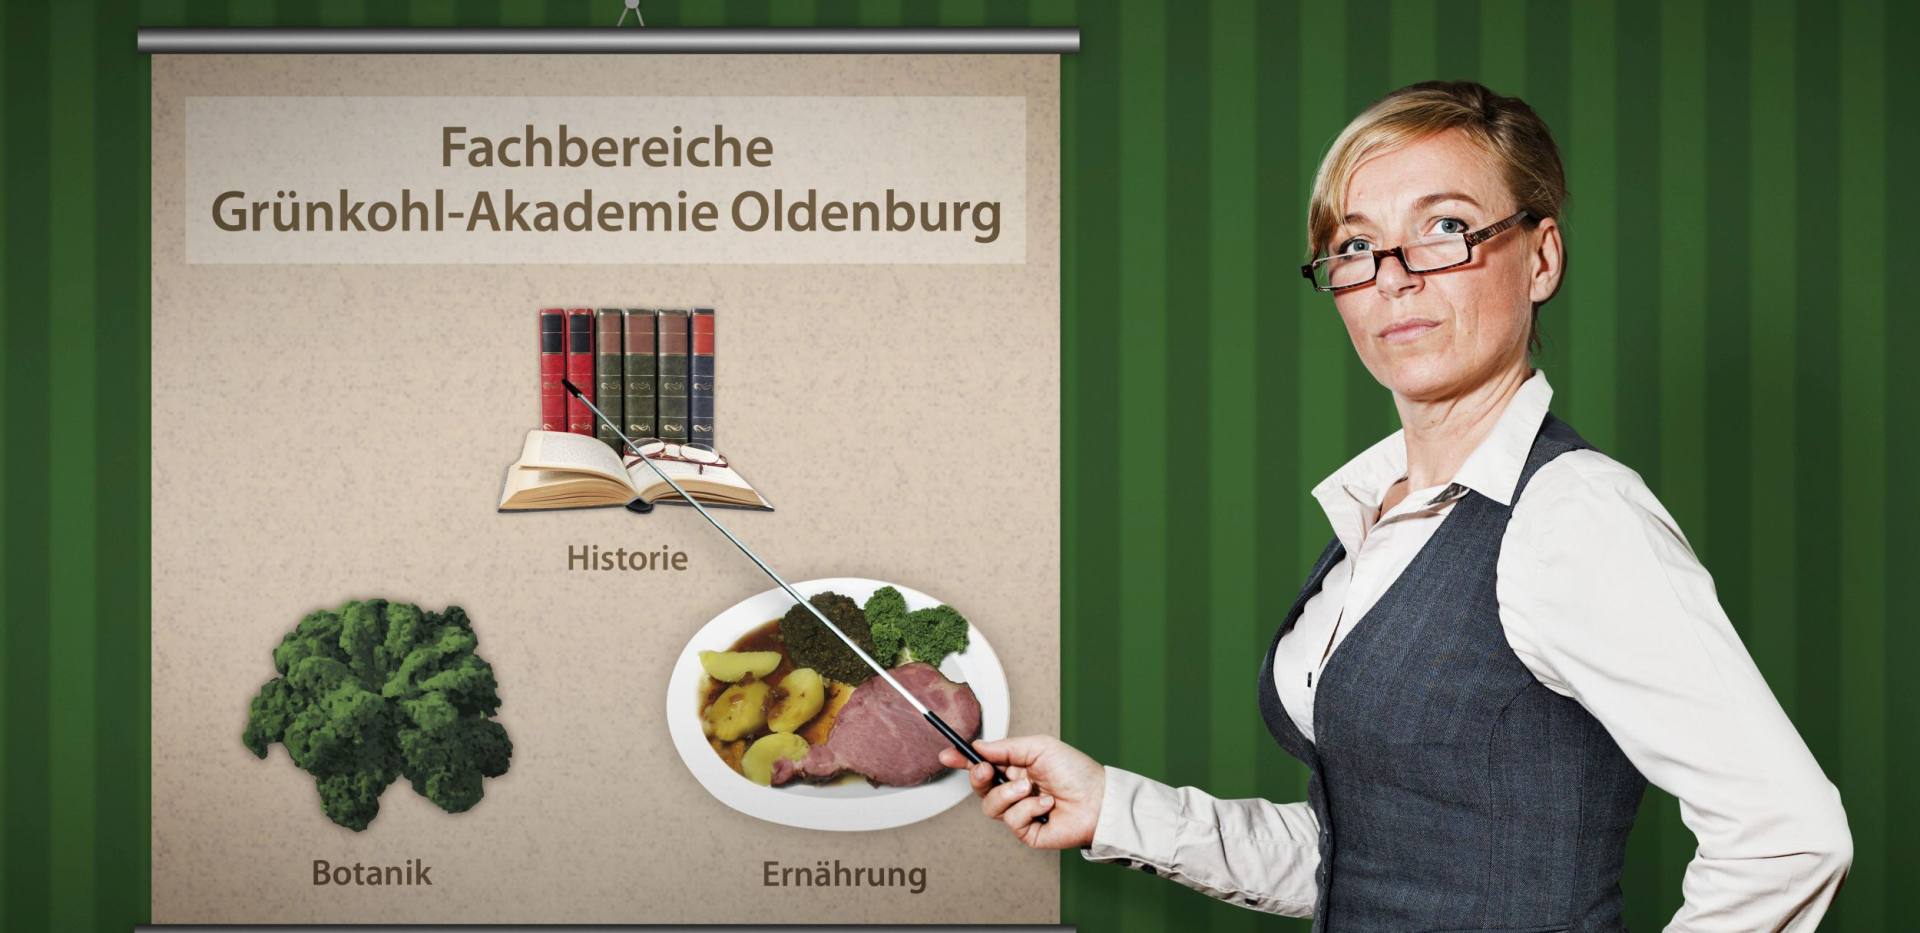 Grünkohl-Akademie Oldenburg